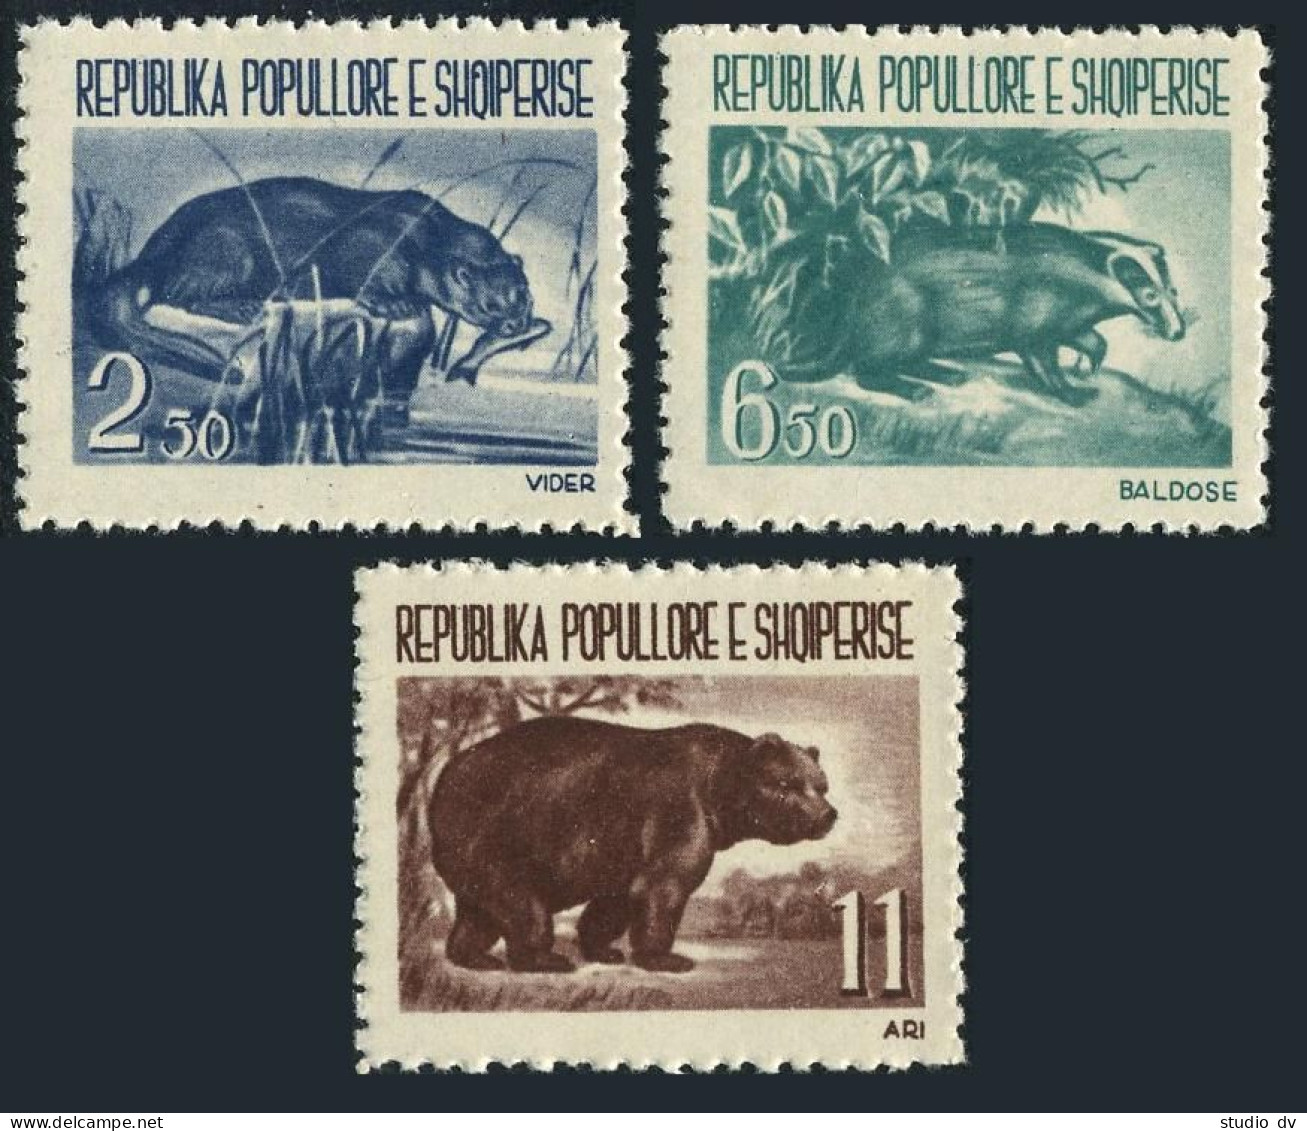 Albania 589-591,MNH.Michel 627-629. Animals 1961.Otter,Badger,Bear. - Albania